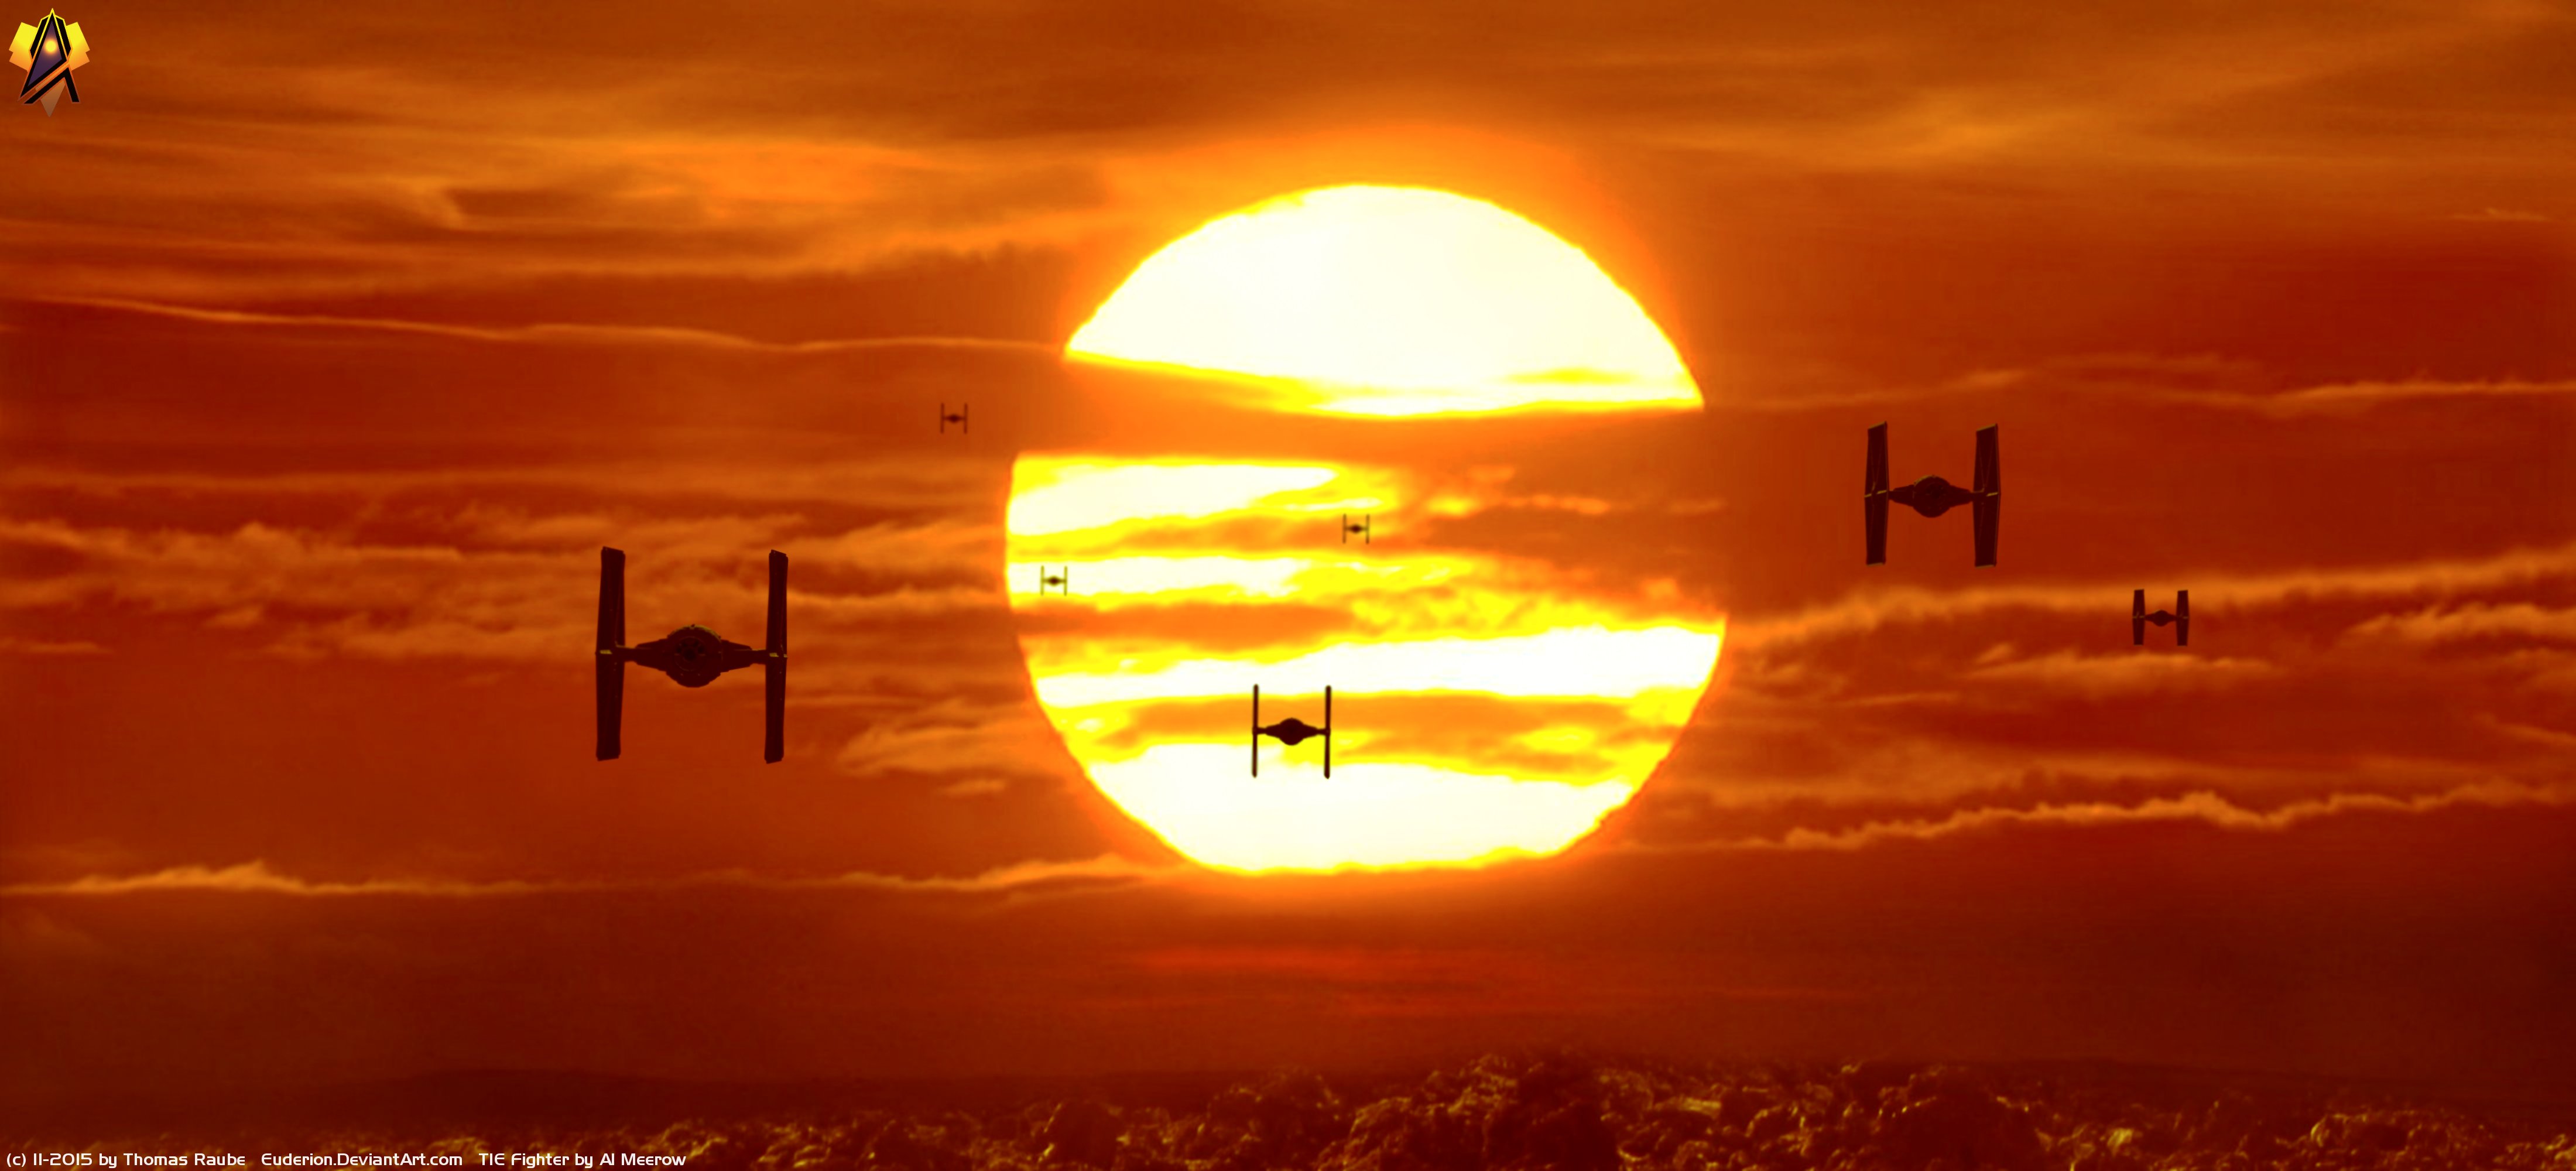 Star Wars Movie Episode Vii The Force Awakens